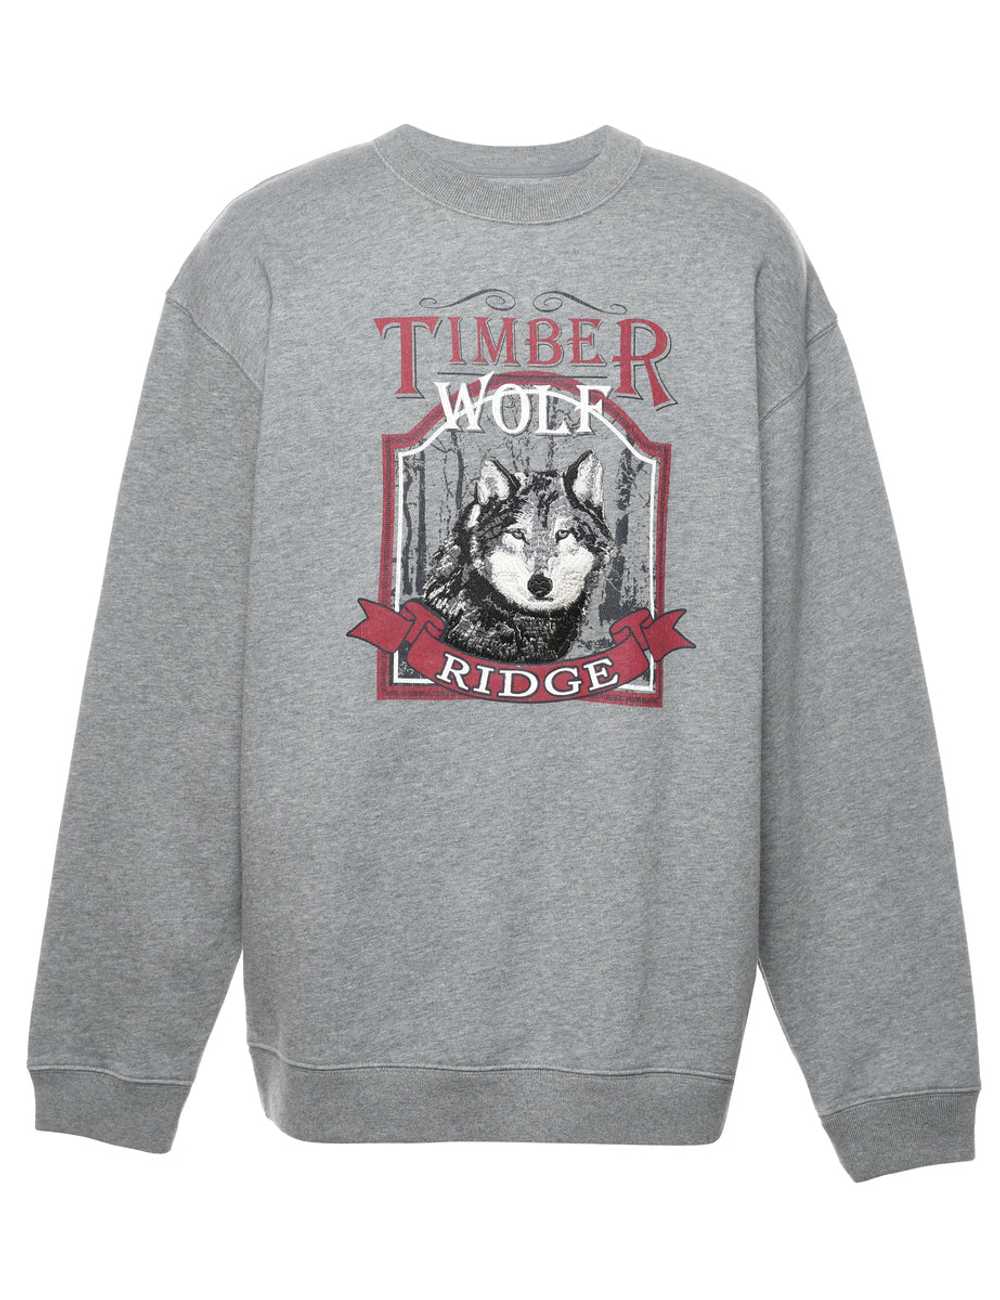 Marl Grey Timber Wolf Printed Sweatshirt - XL - image 1